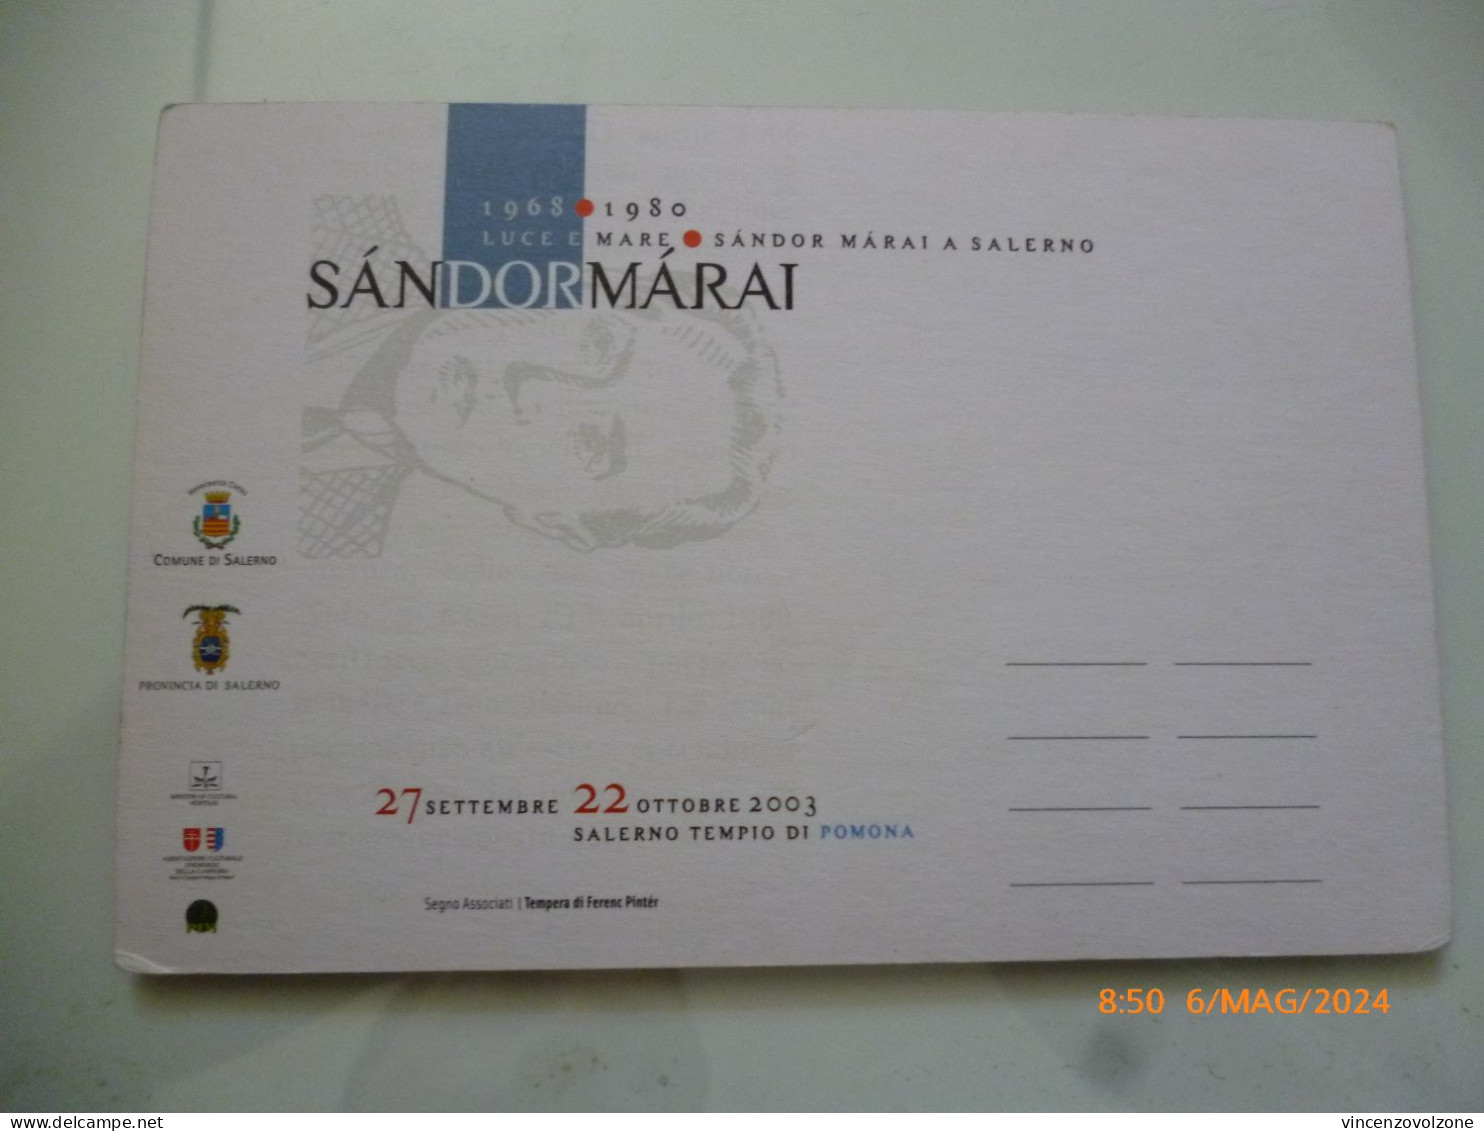 Cartolina "1968 - 1980 SANDORMARAI A SALERNO 2003" - Exhibitions